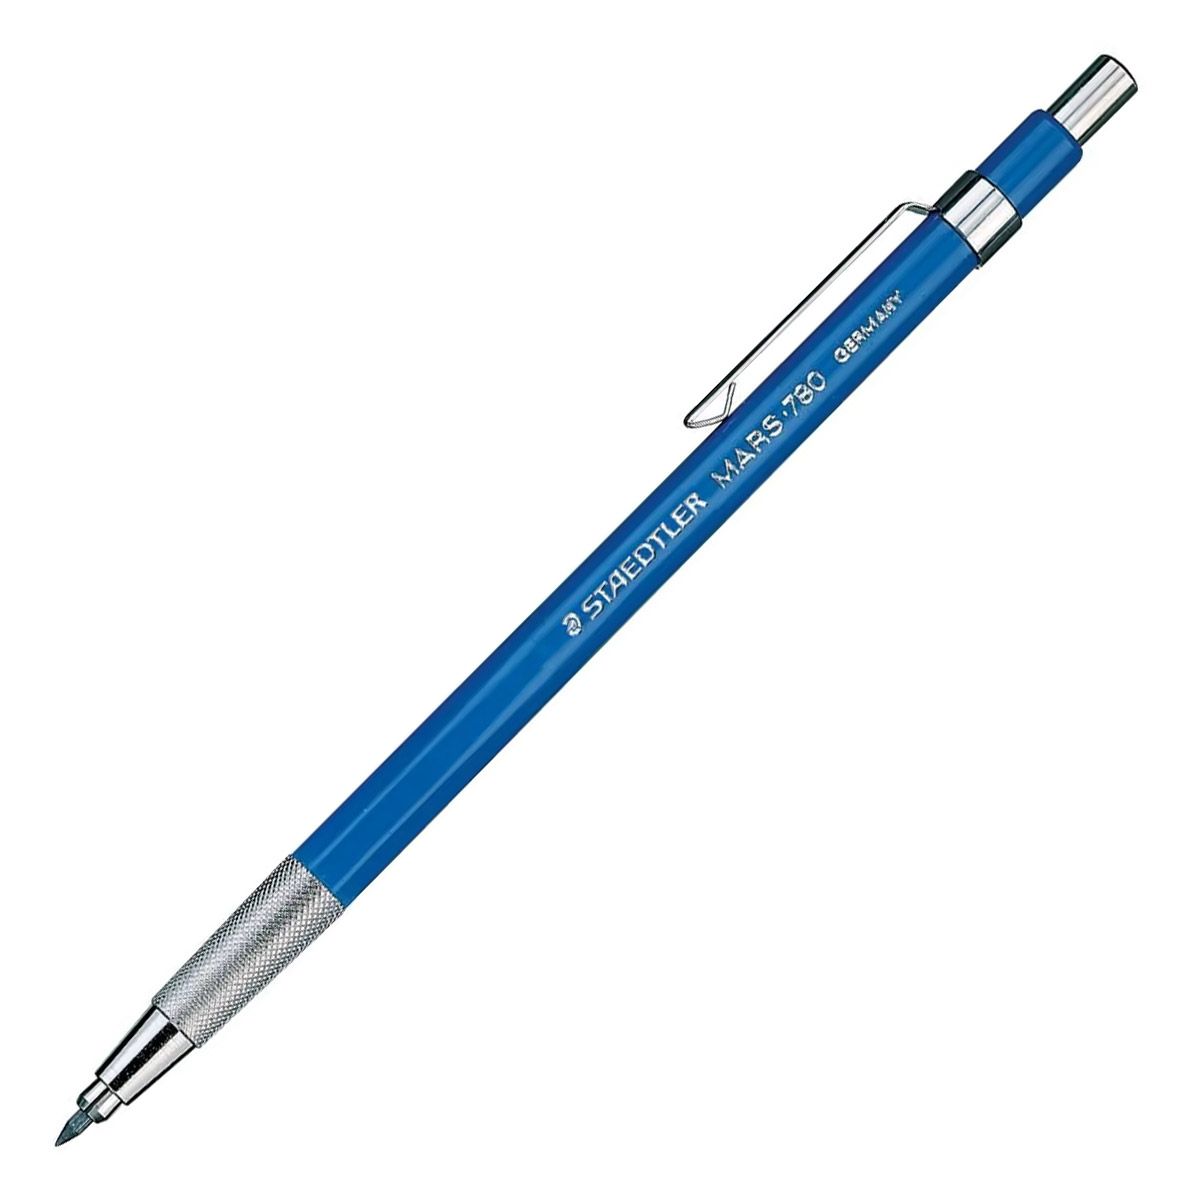 Staedtler Mars 780 Technical Mechanical Pencil, 2 mm